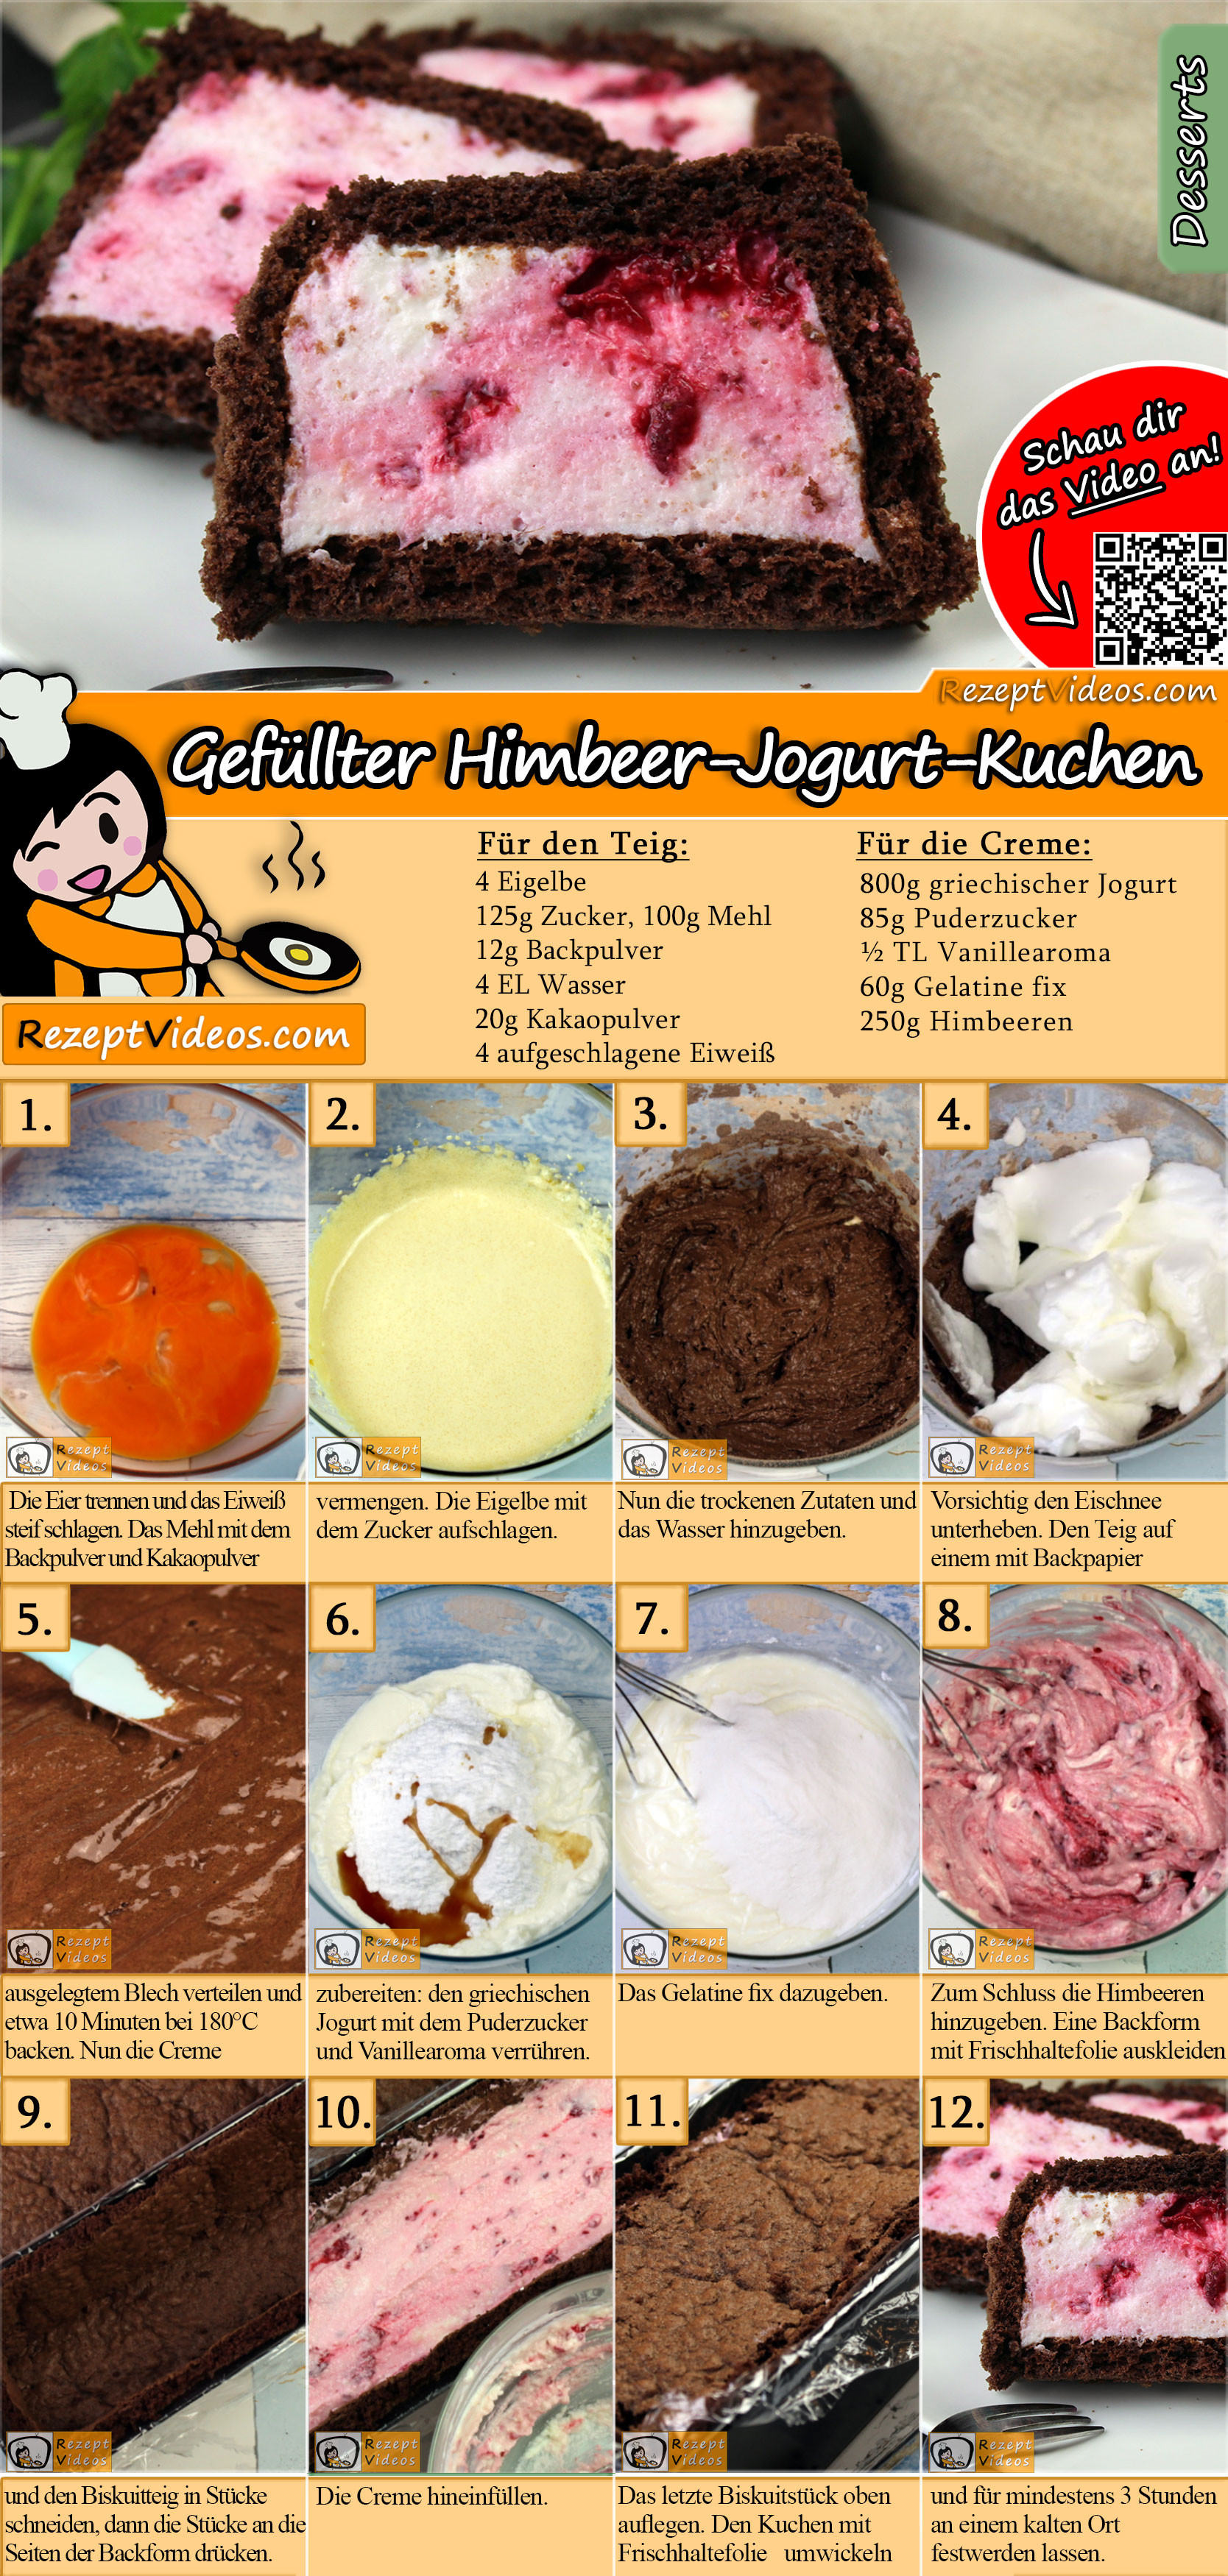 Gefüllter Himbeer-Jogurt-Kuchen Rezept mit Video